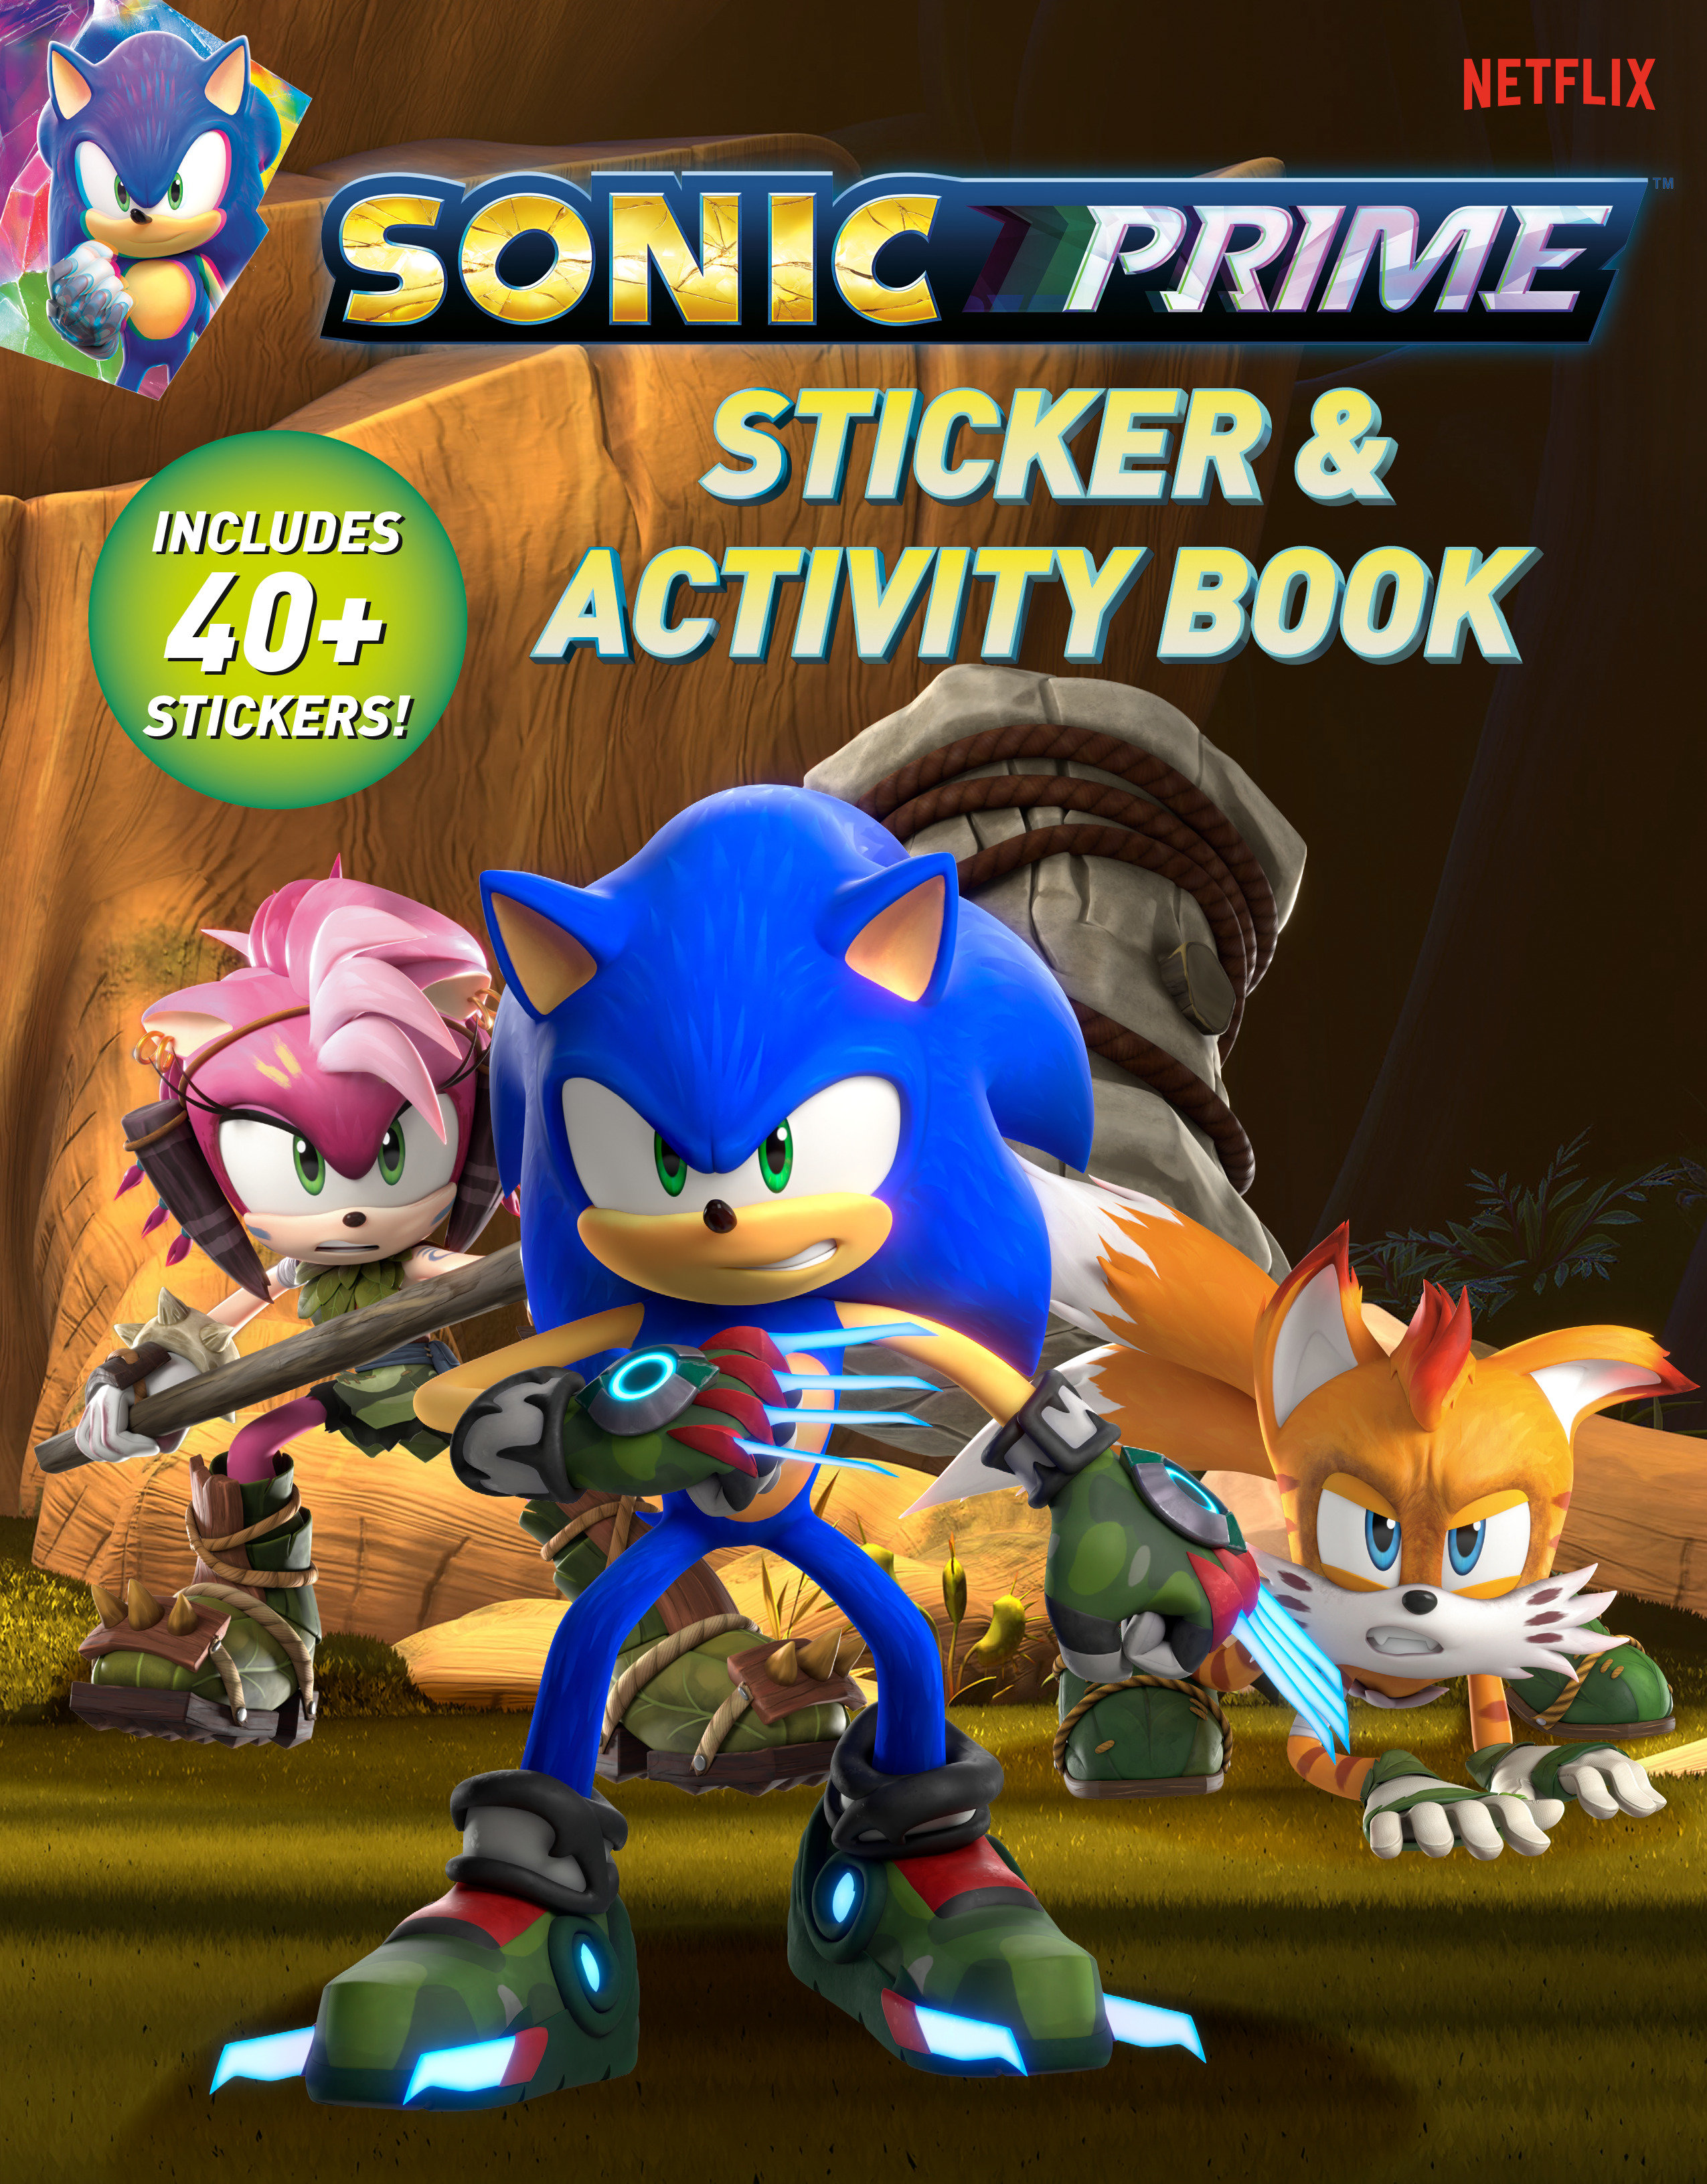 Sonic Prime Activity Book Volume 2 Sonic Prime Sticker & Activity Book